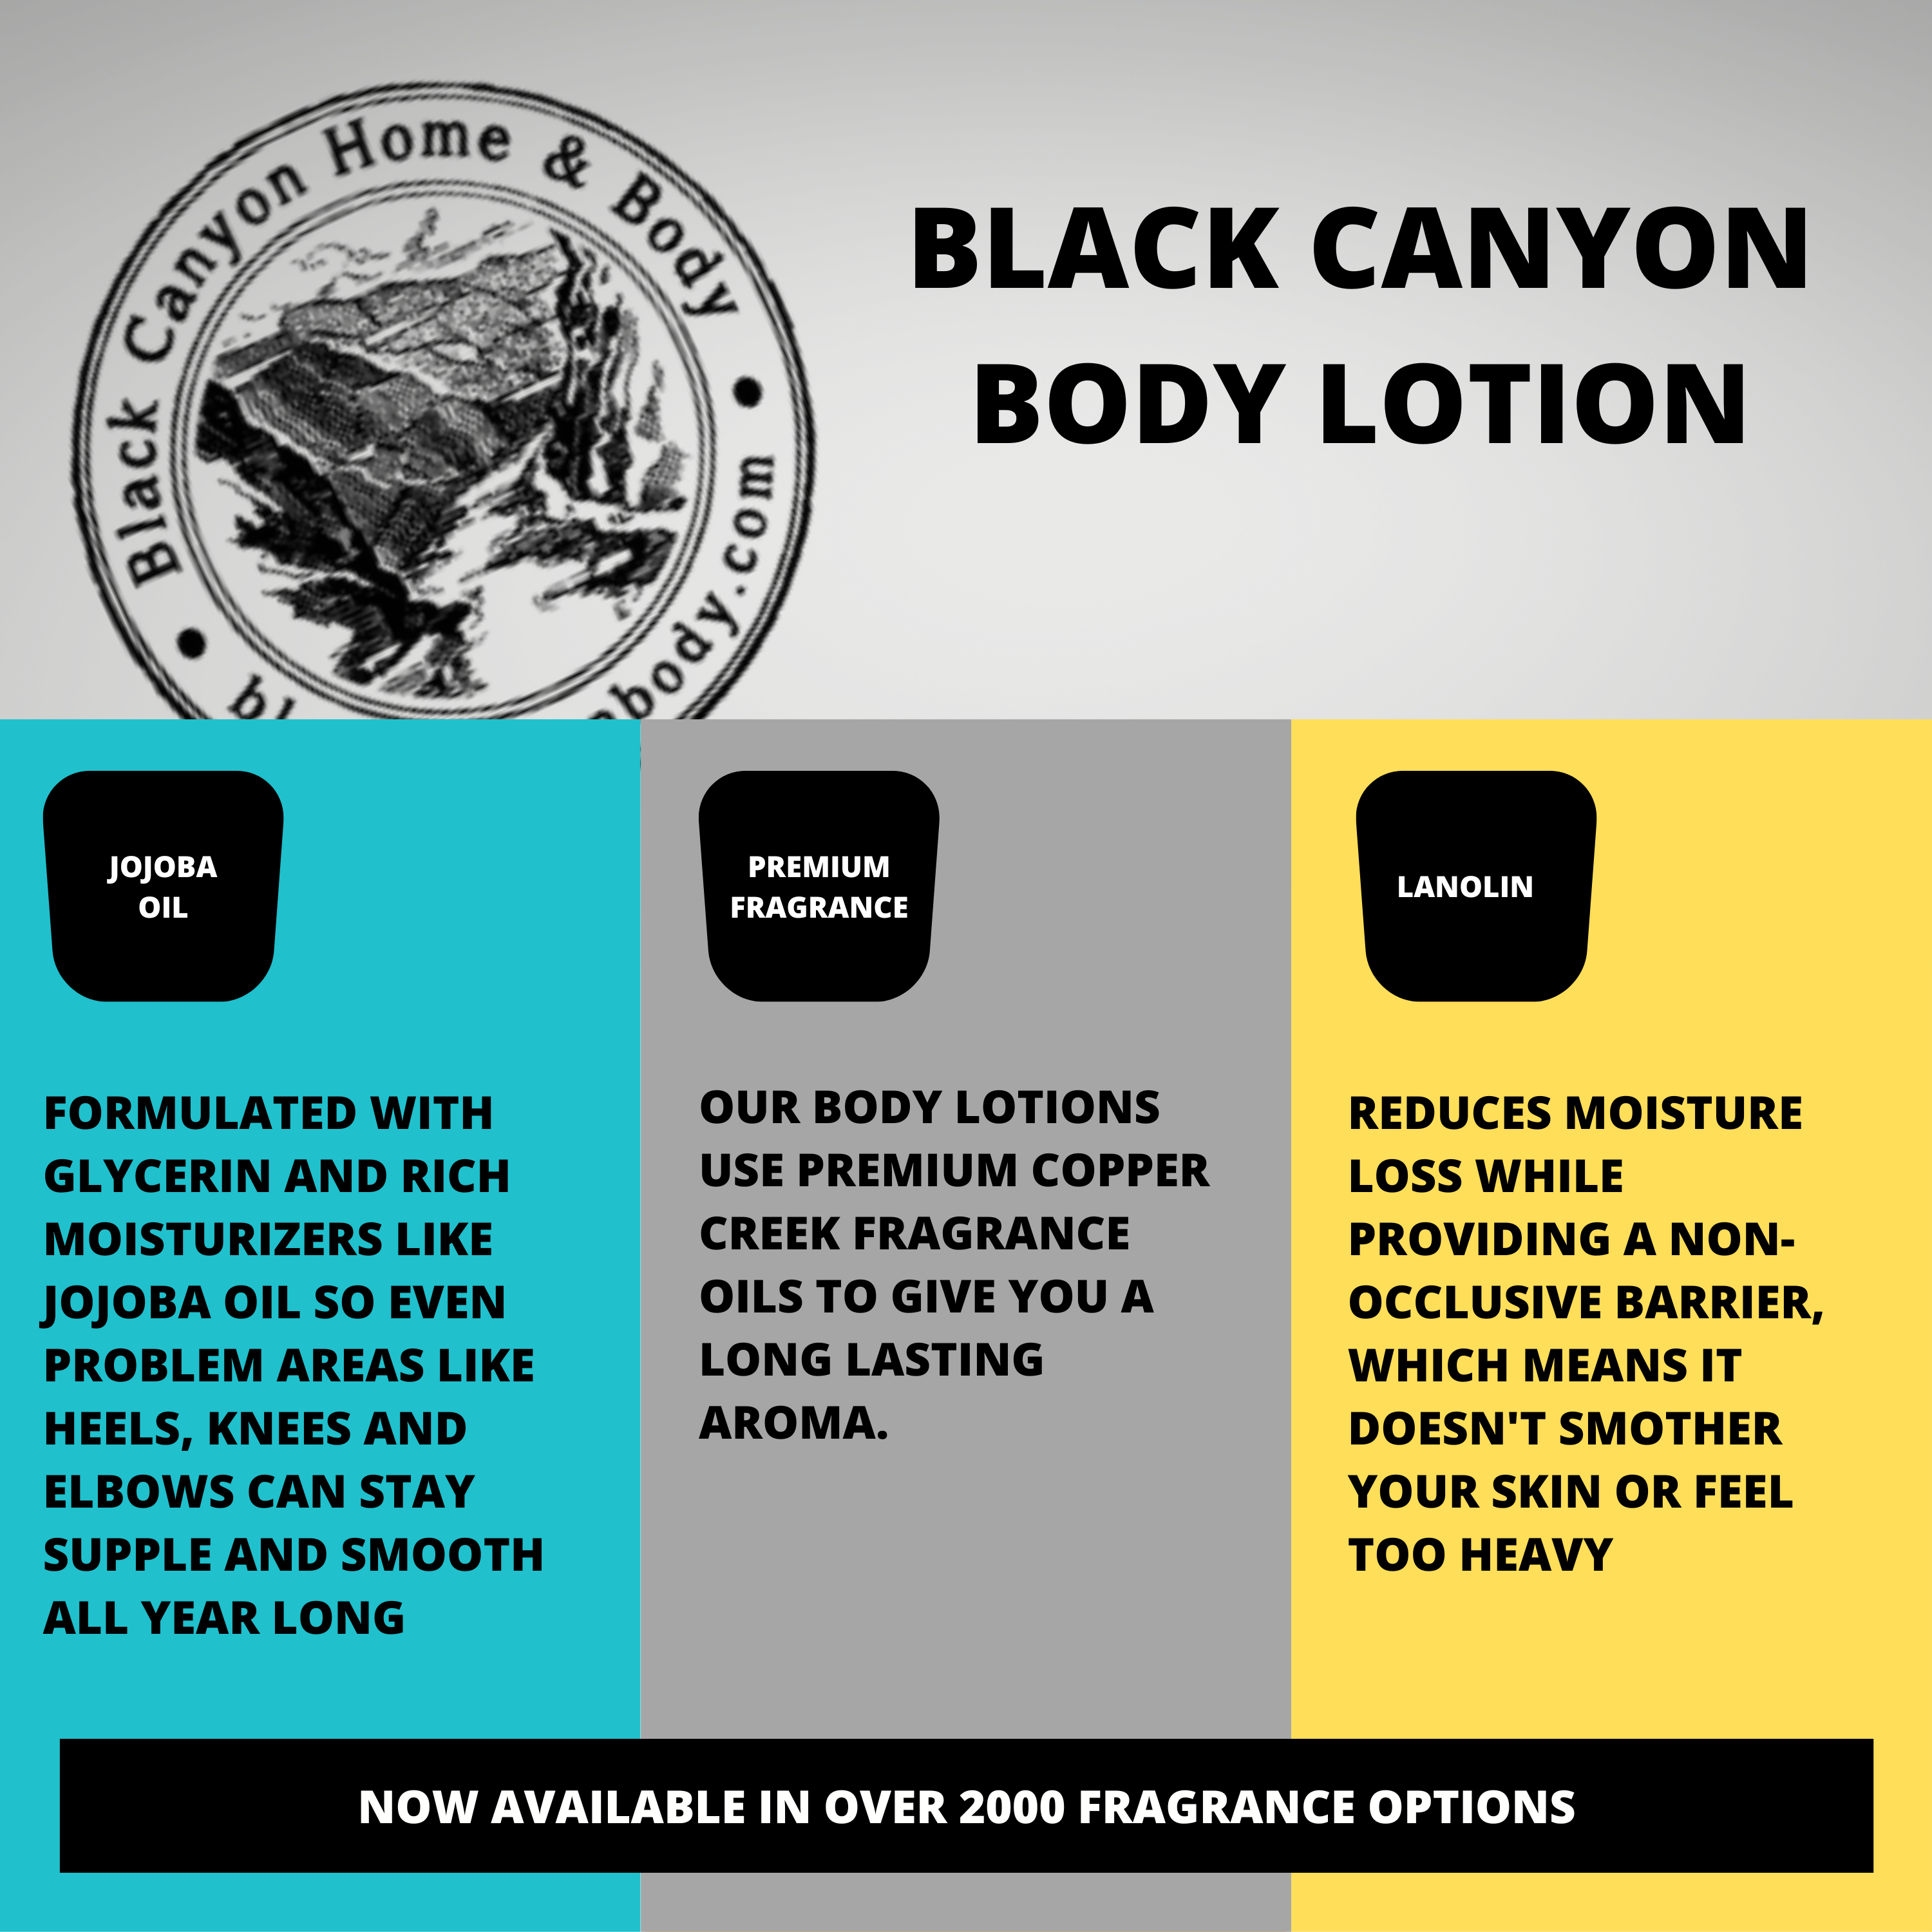 Black Canyon Bergamot Fig & Walnut Scented Luxury Body Lotion with Lanolin and Jojoba Oil